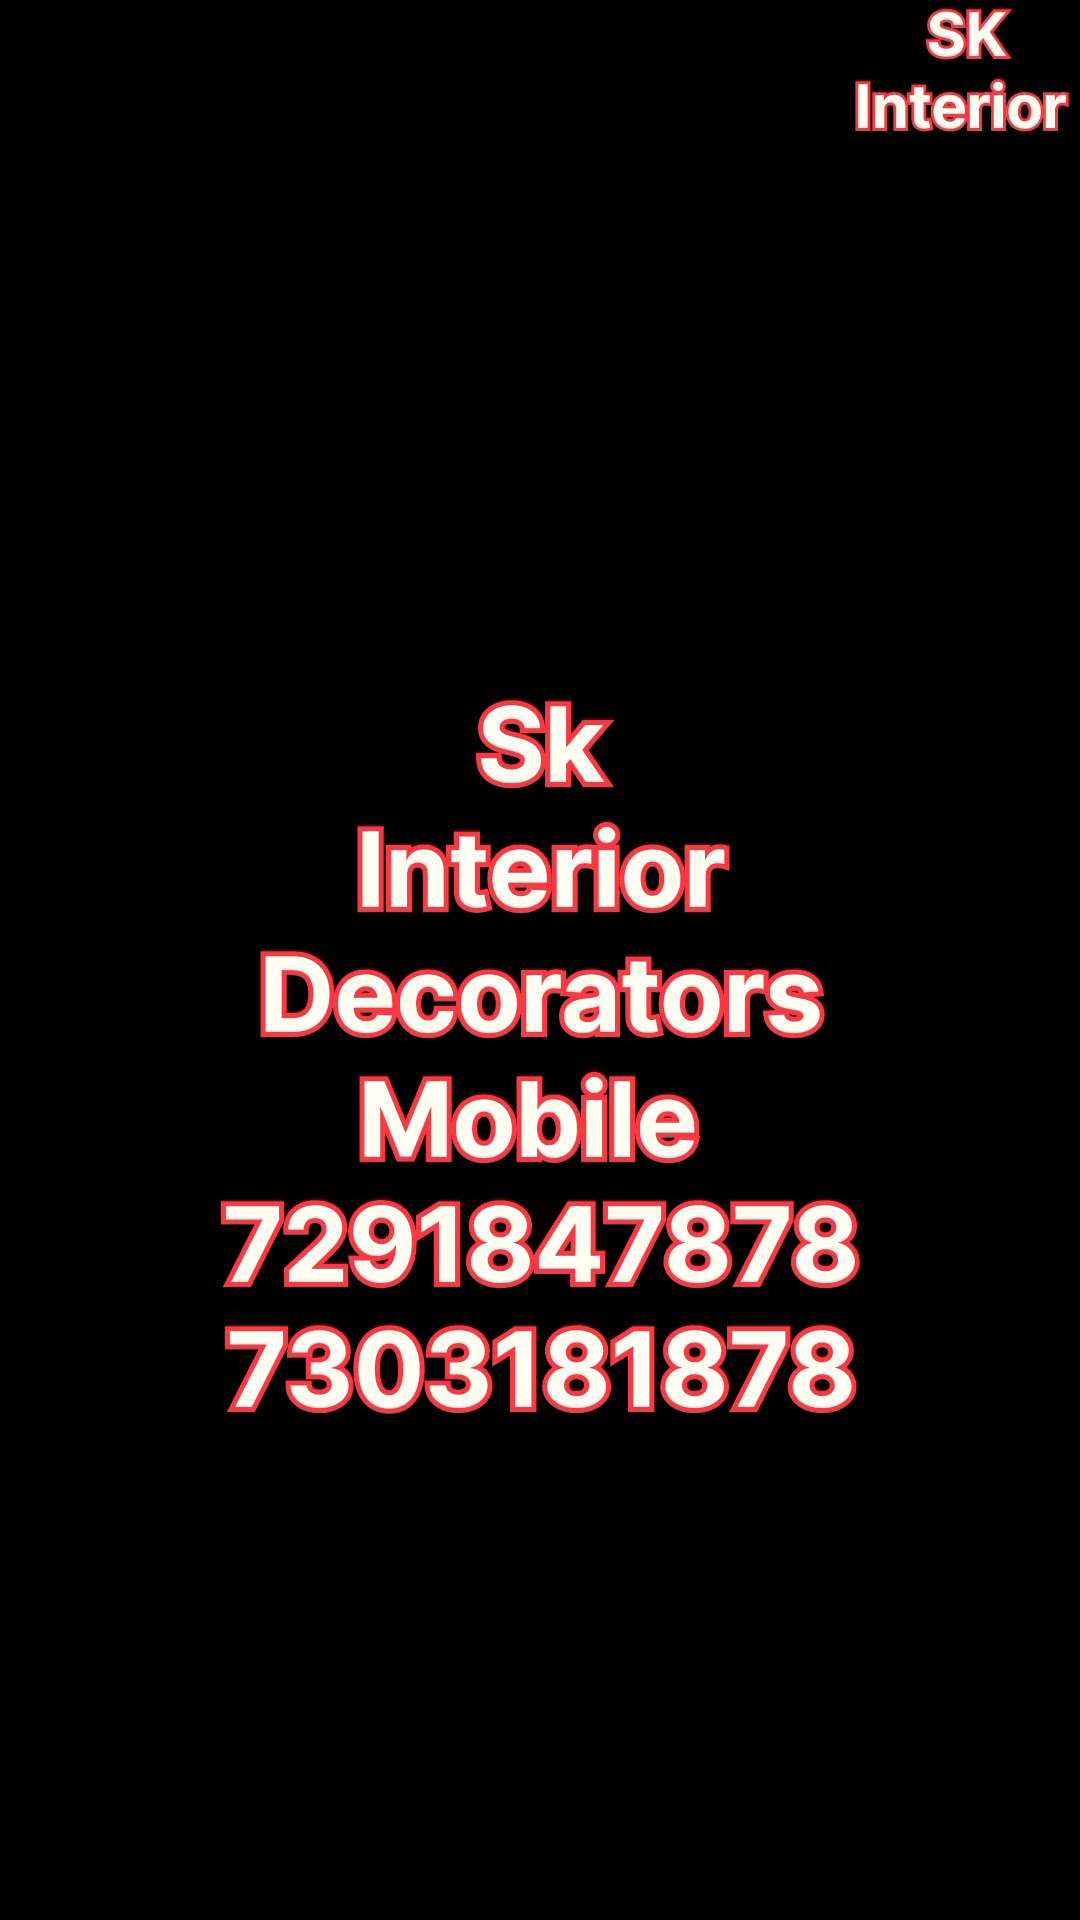 sk interior decorators mobile 7275008425  
1-kitchen 
3-almirah 
flat 1560 squire








 #KitchenInterior #woodenAlmirah  #almirahinterior